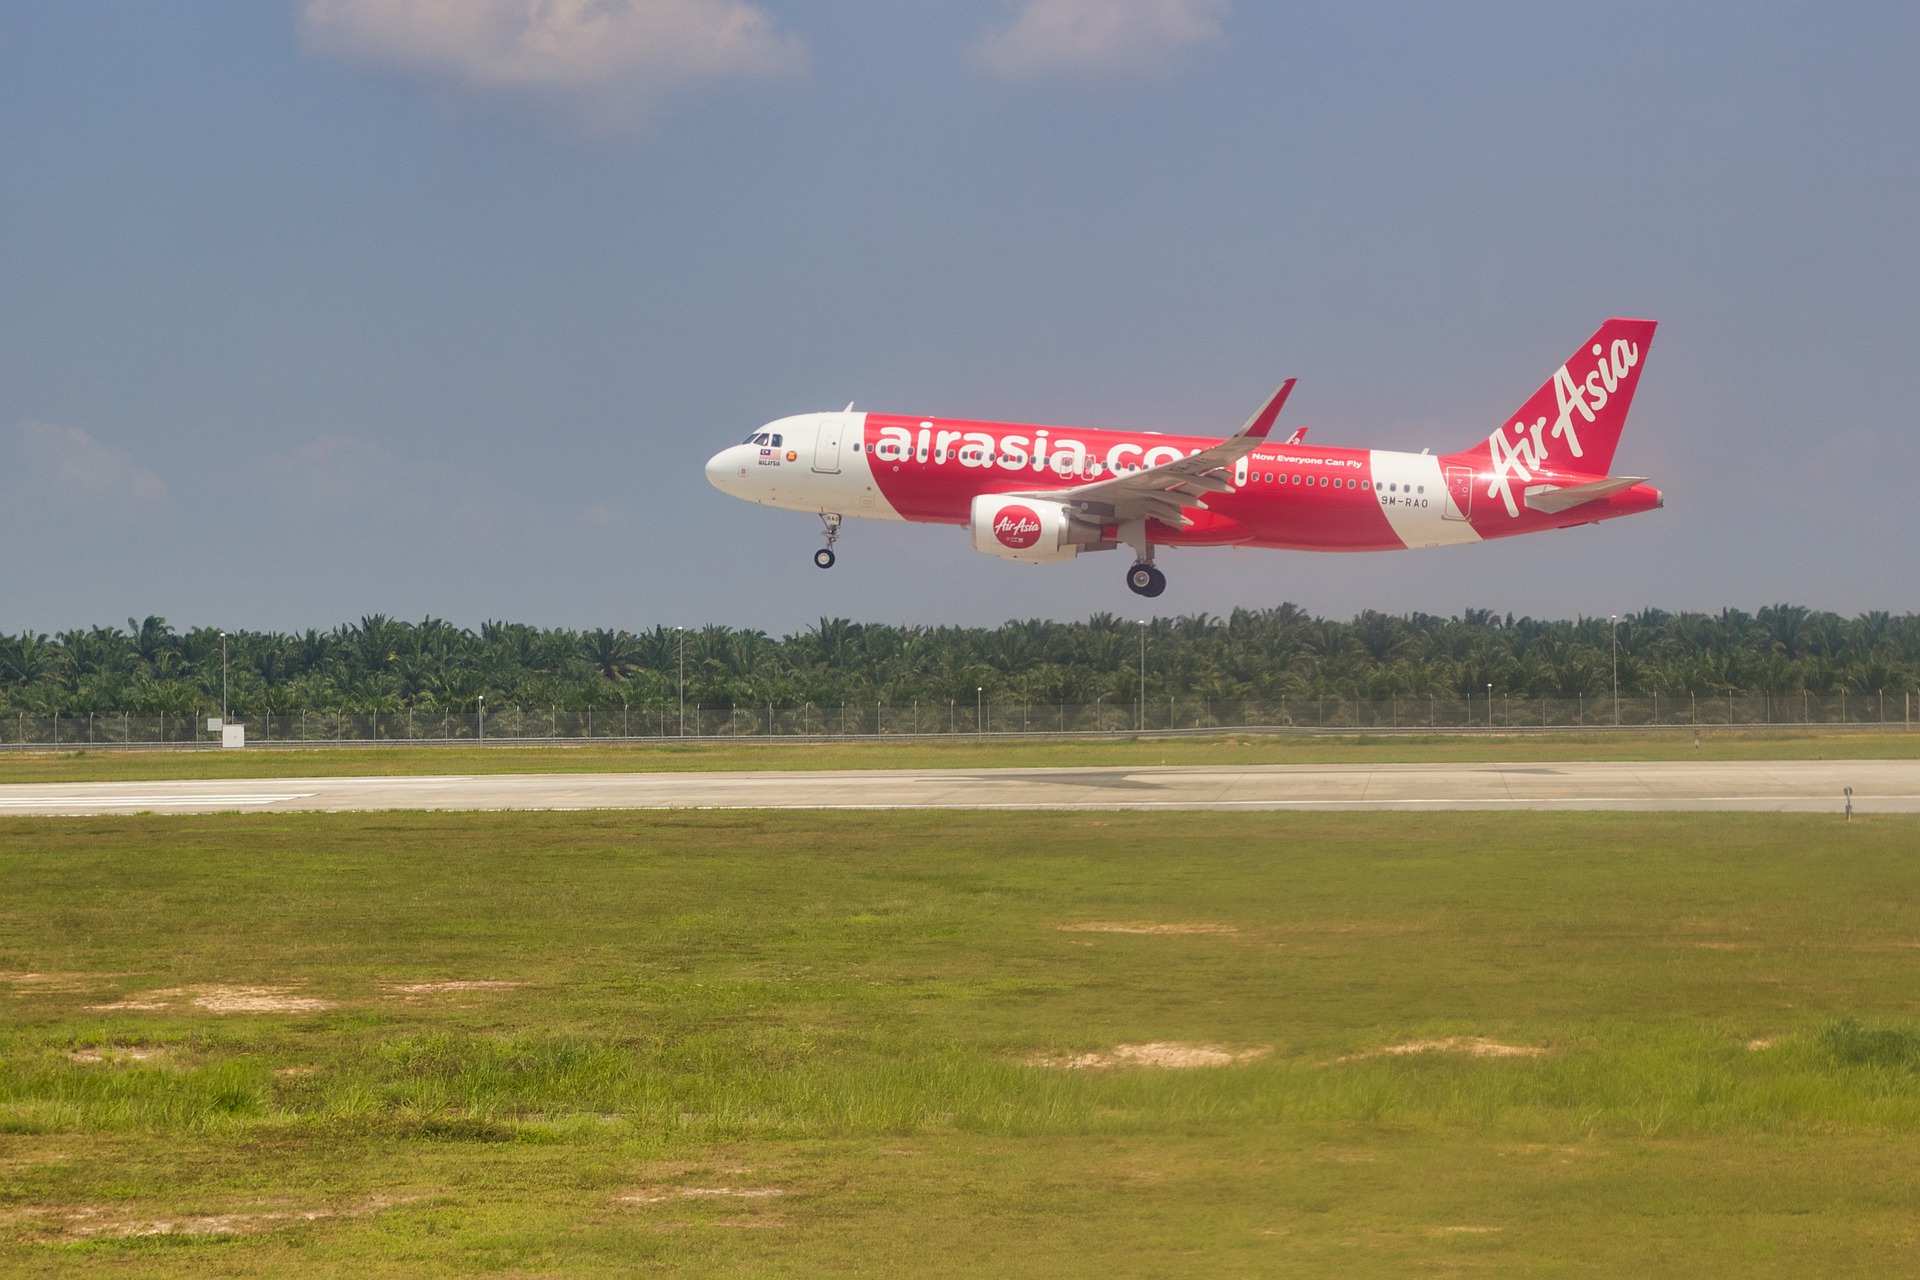 Aircraft landing in Kulala Lumpur, Malaysia